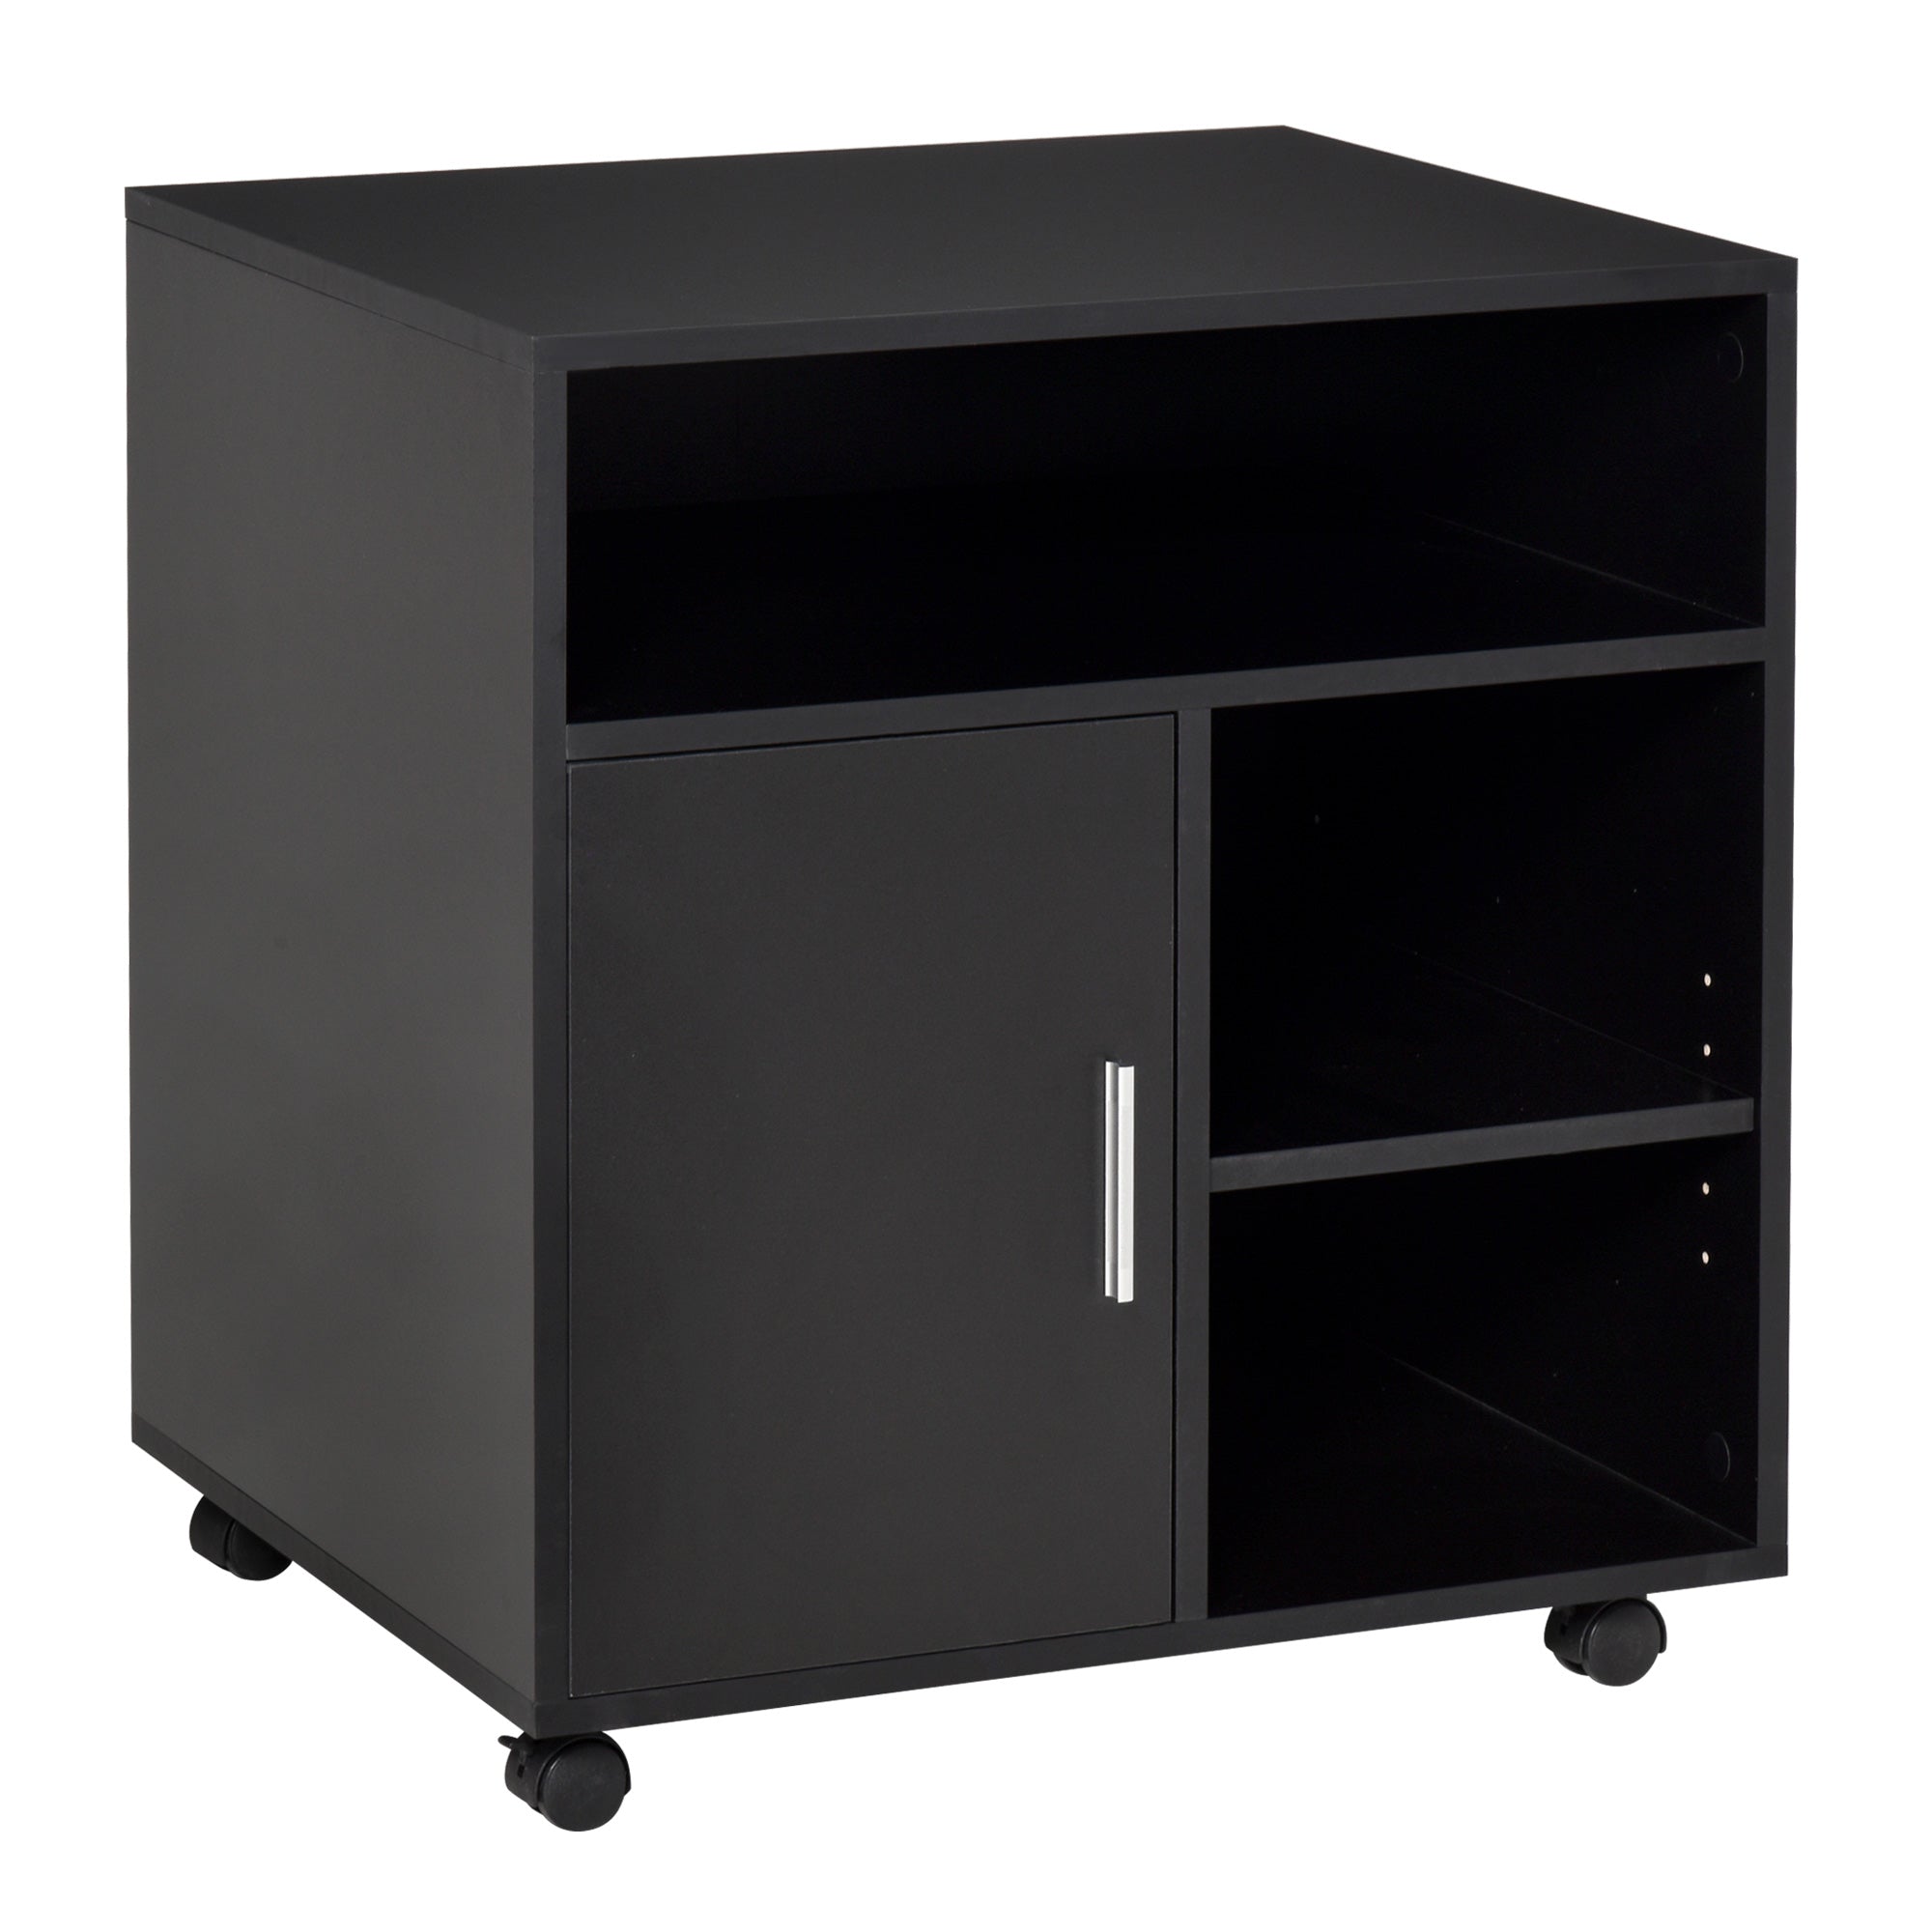 Multi-Storage Printer Stand Unit Office Desk Side Mobile Storage w/ Wheels Modern Style 60L x 50W x 65.5H cm - Black-0